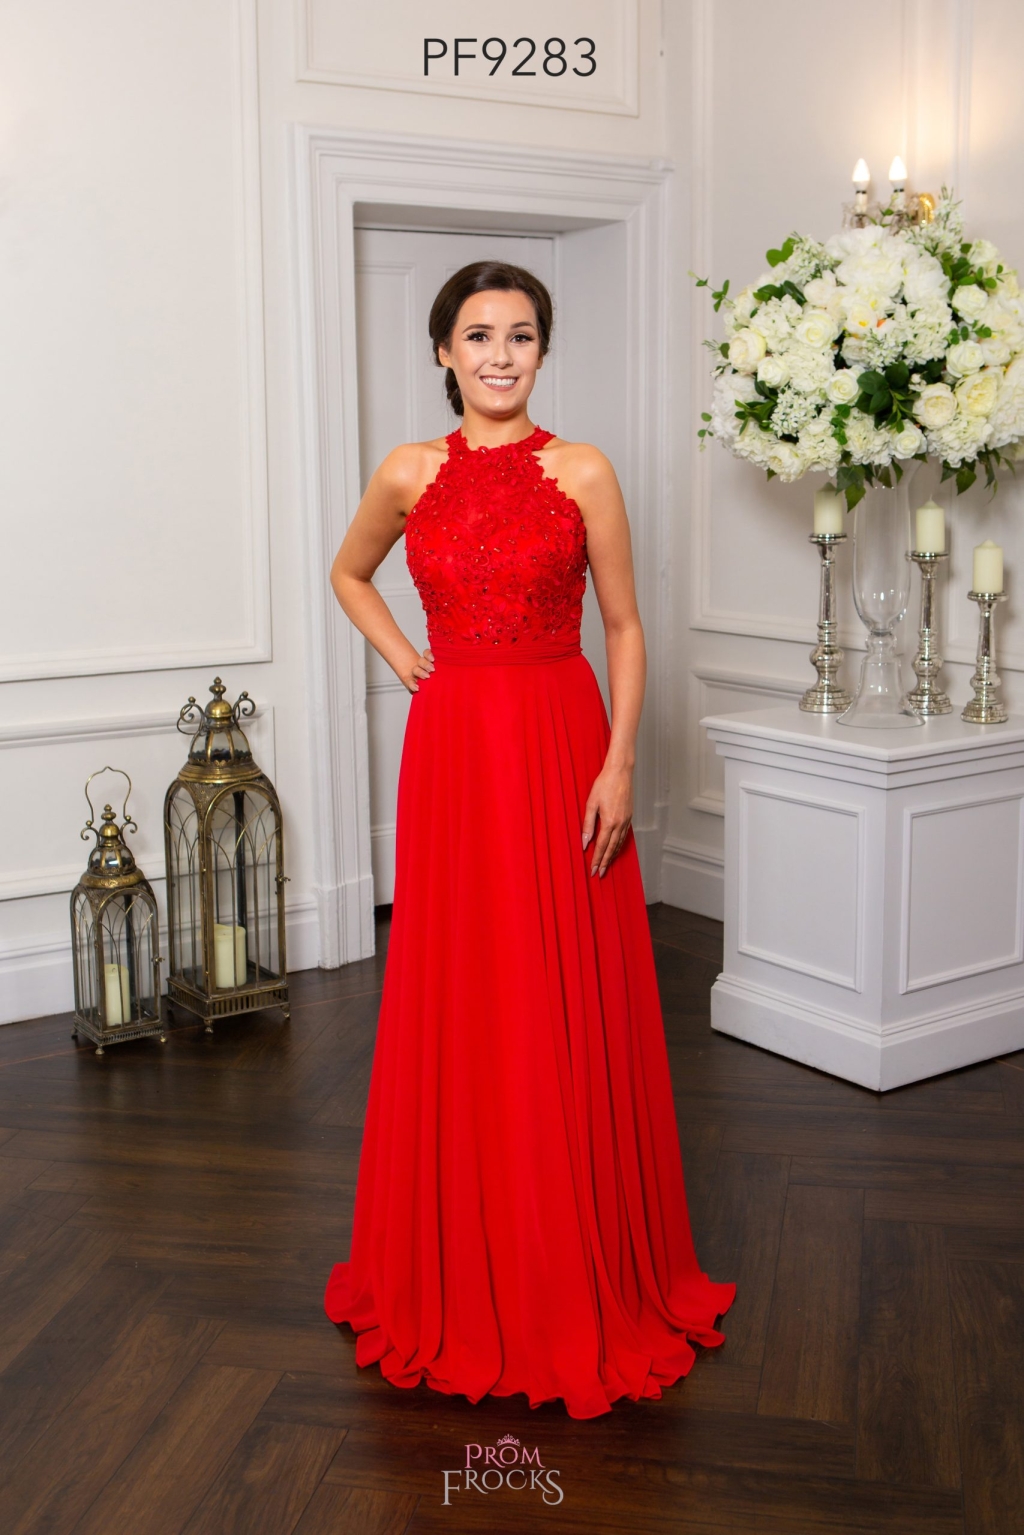 PF9283 Red Prom/Evening Dress